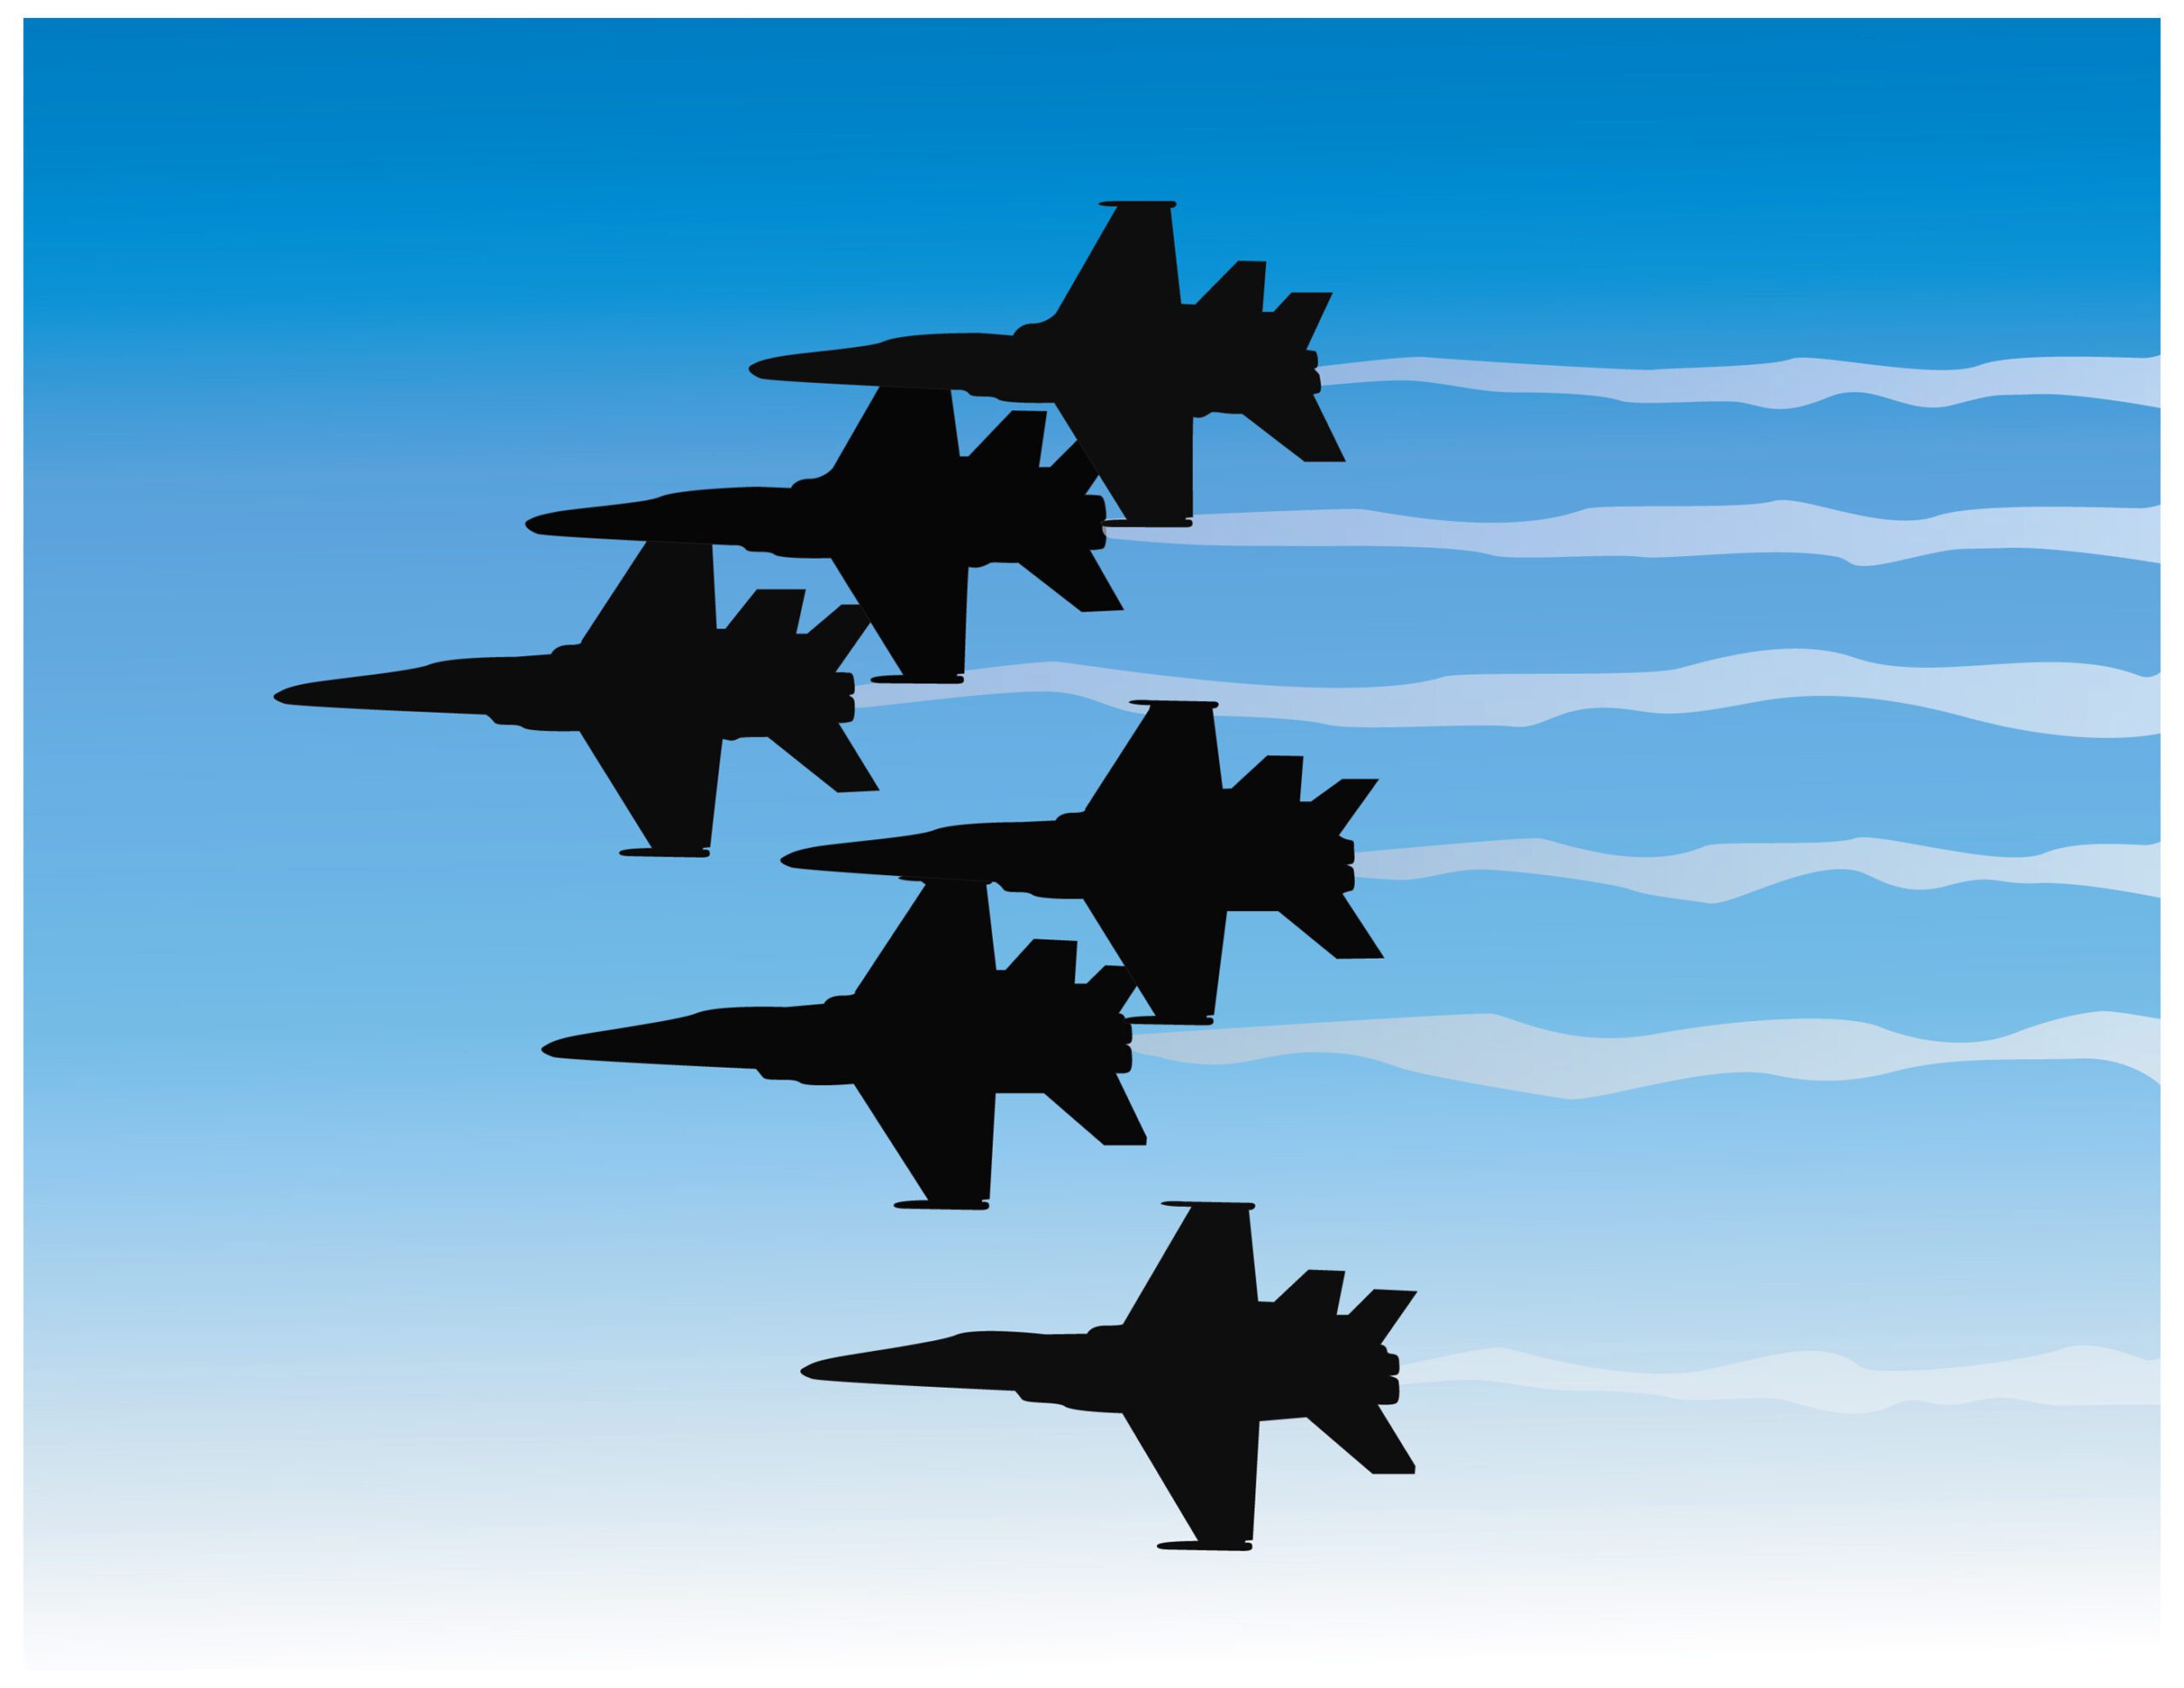 6 airforce jets flying together